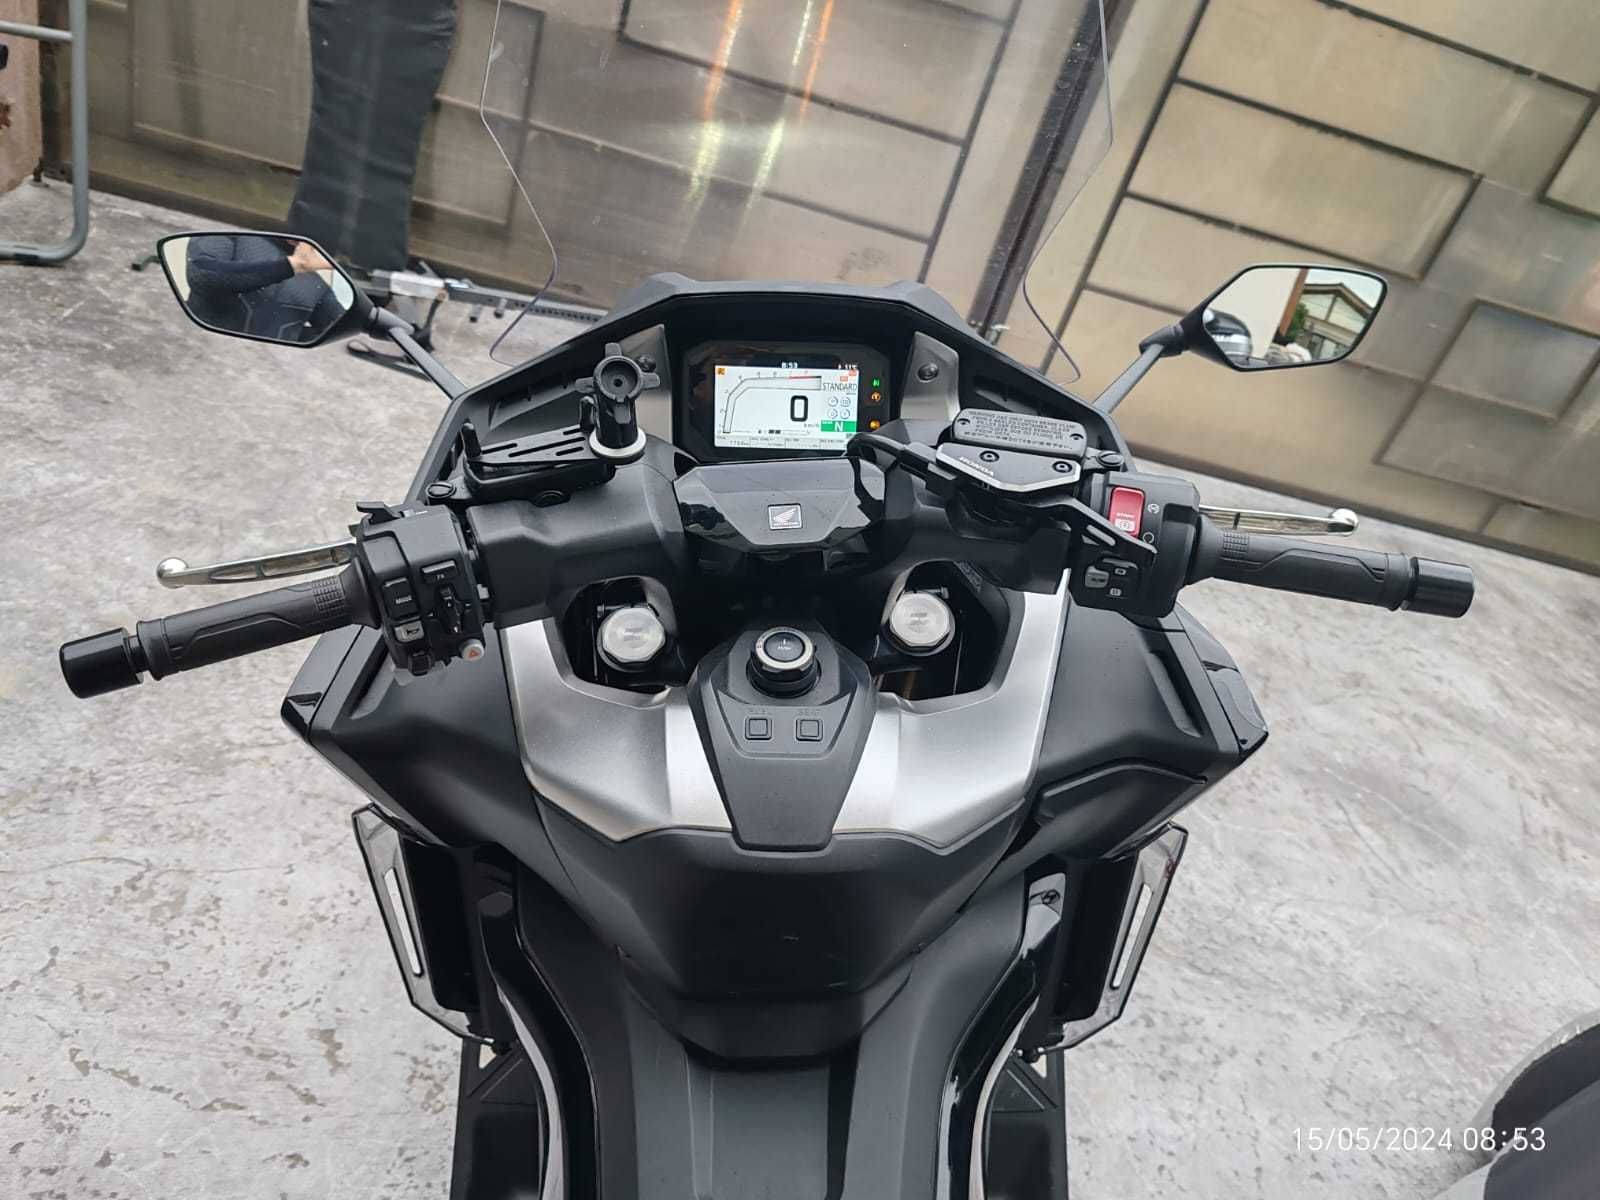 Motocicleta Honda Forza 750 in garantie